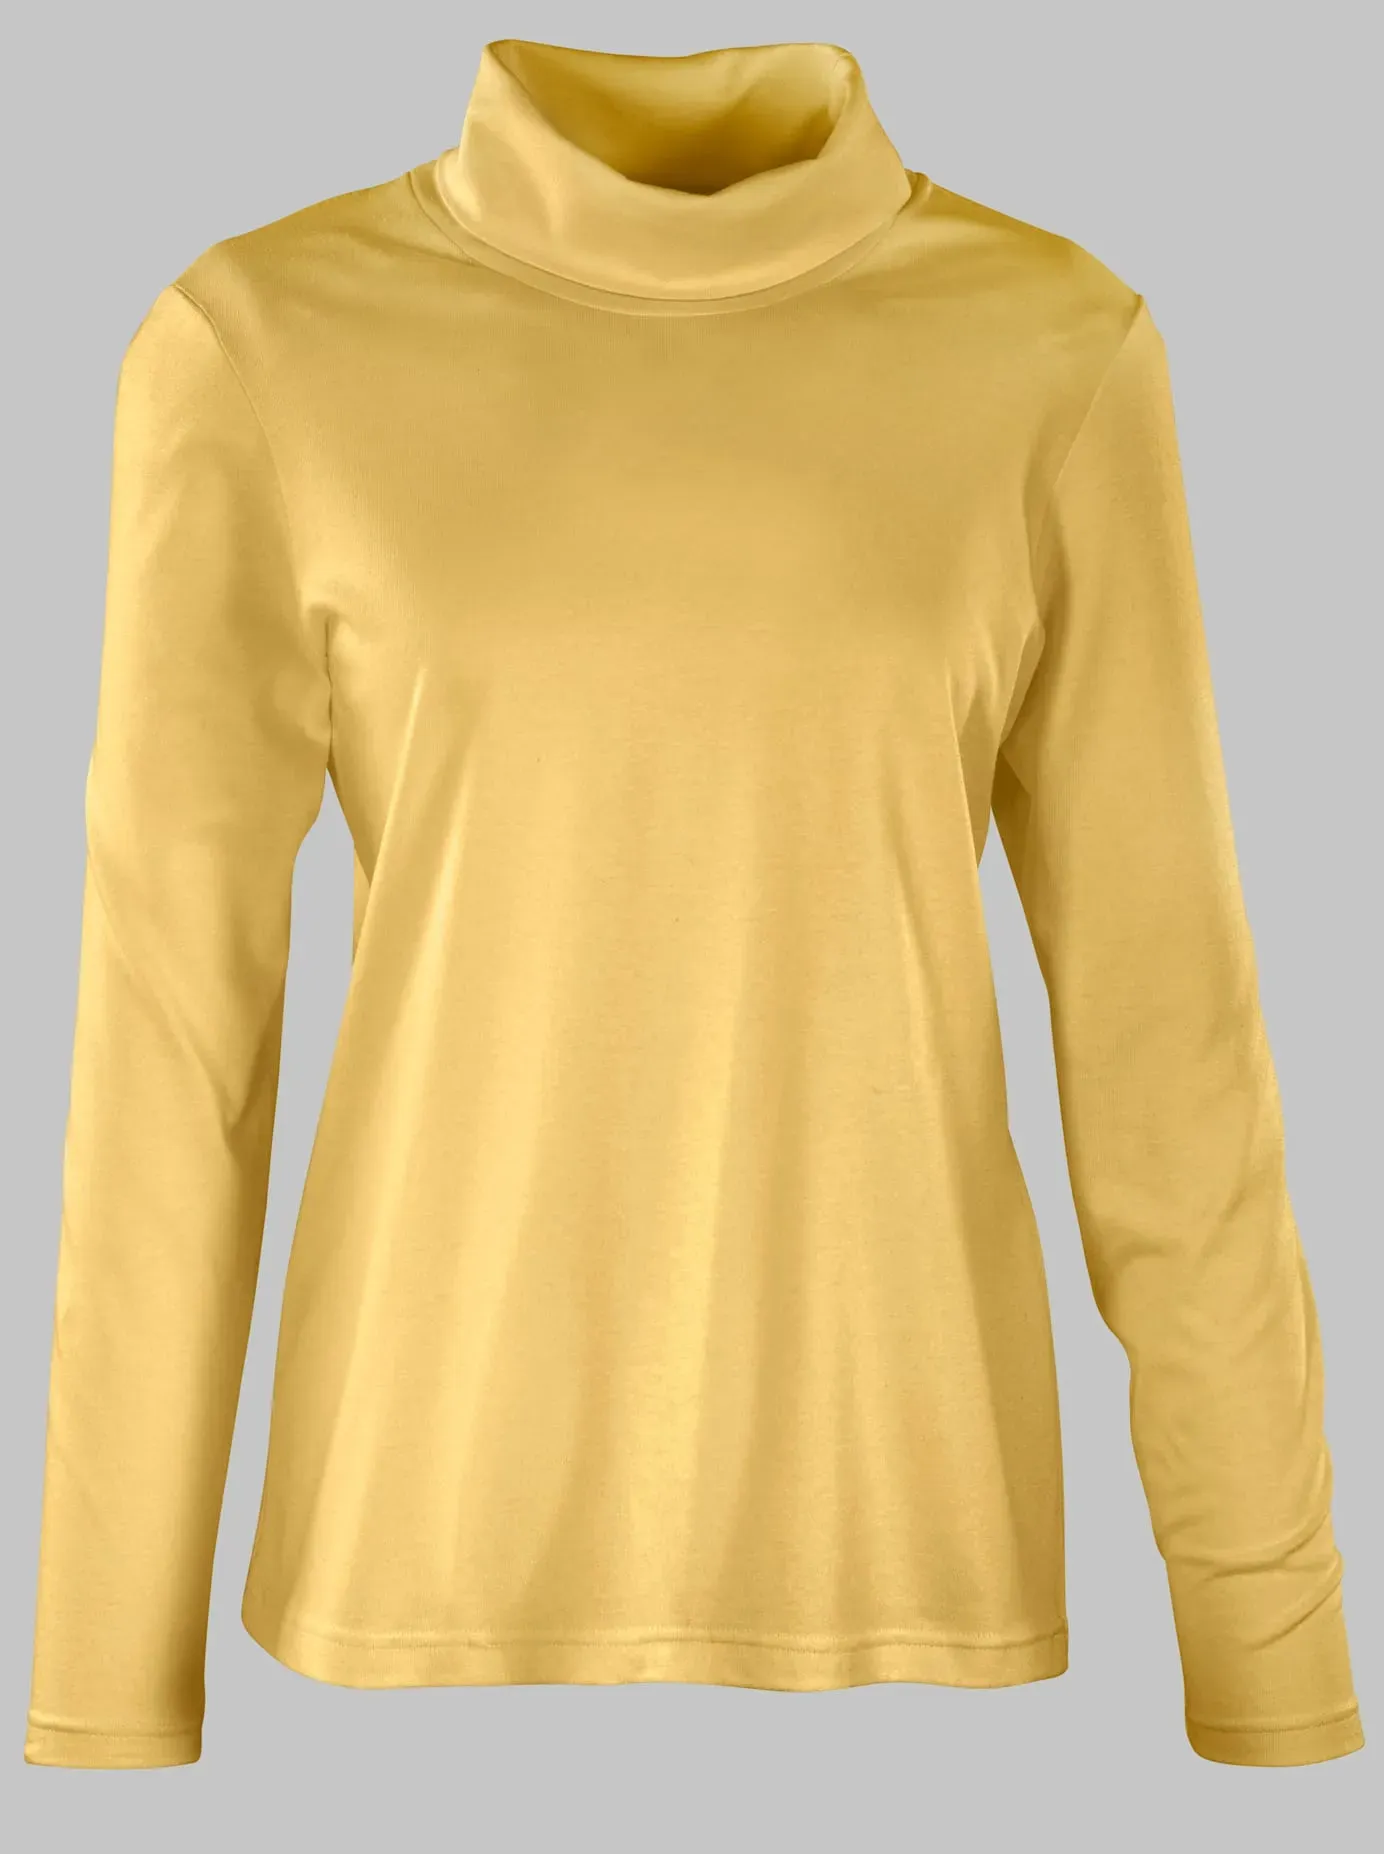 Rollkragenshirt CASUAL LOOKS "Rollkragen-Shirt" Gr. 54, gelb (honiggelb) Damen Shirts Jersey